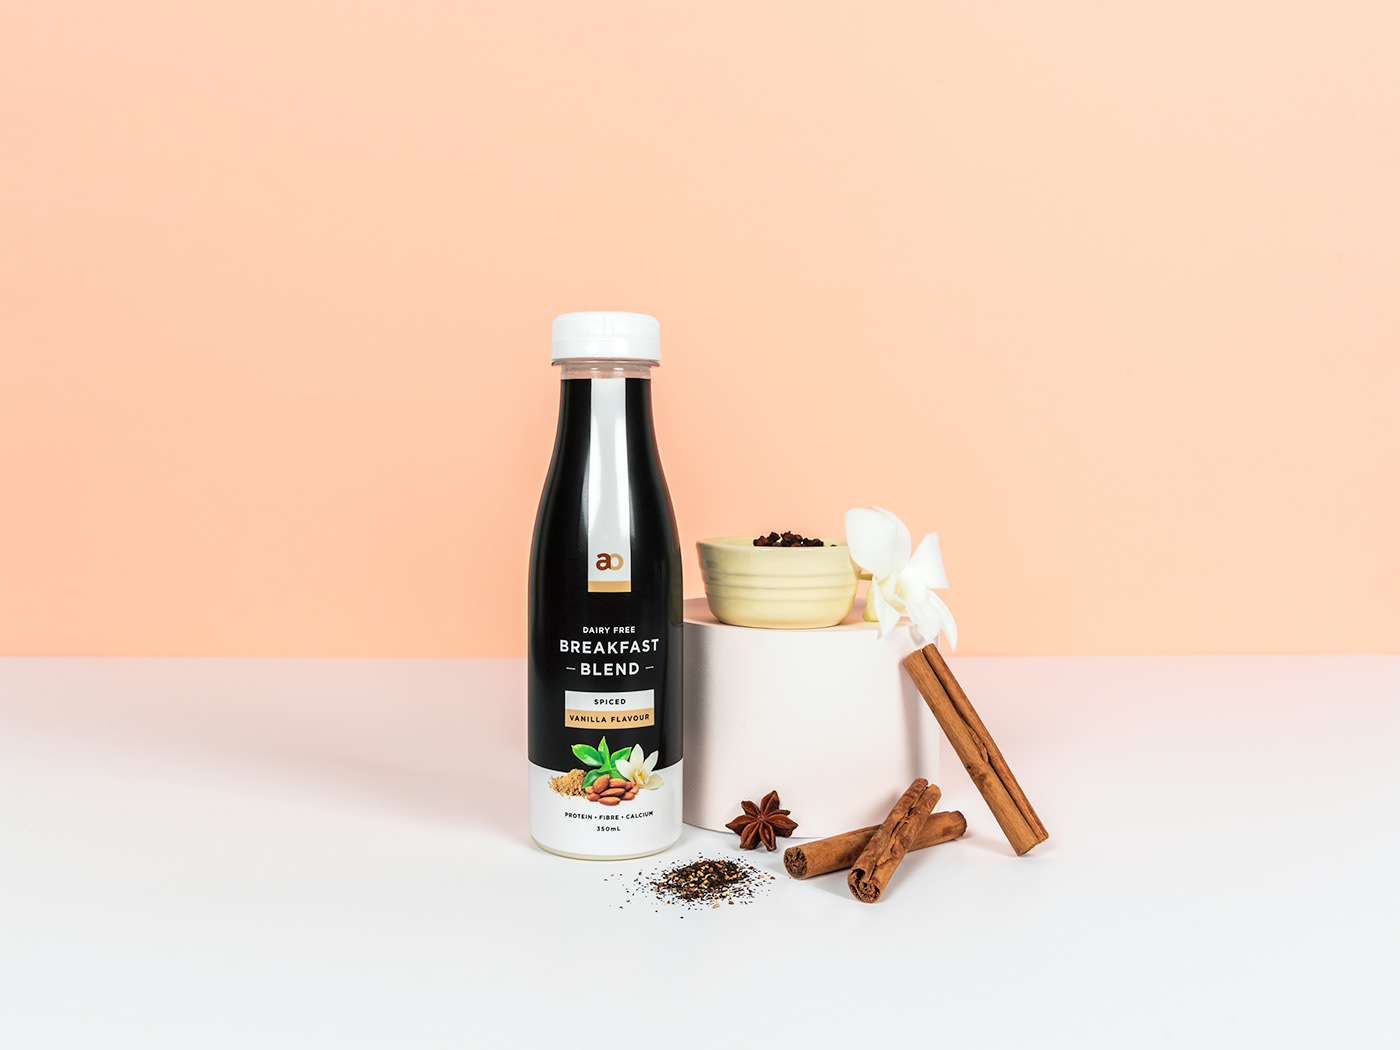 Food  Packaging bottle milk almond set design  photo shoot props Photography  studio